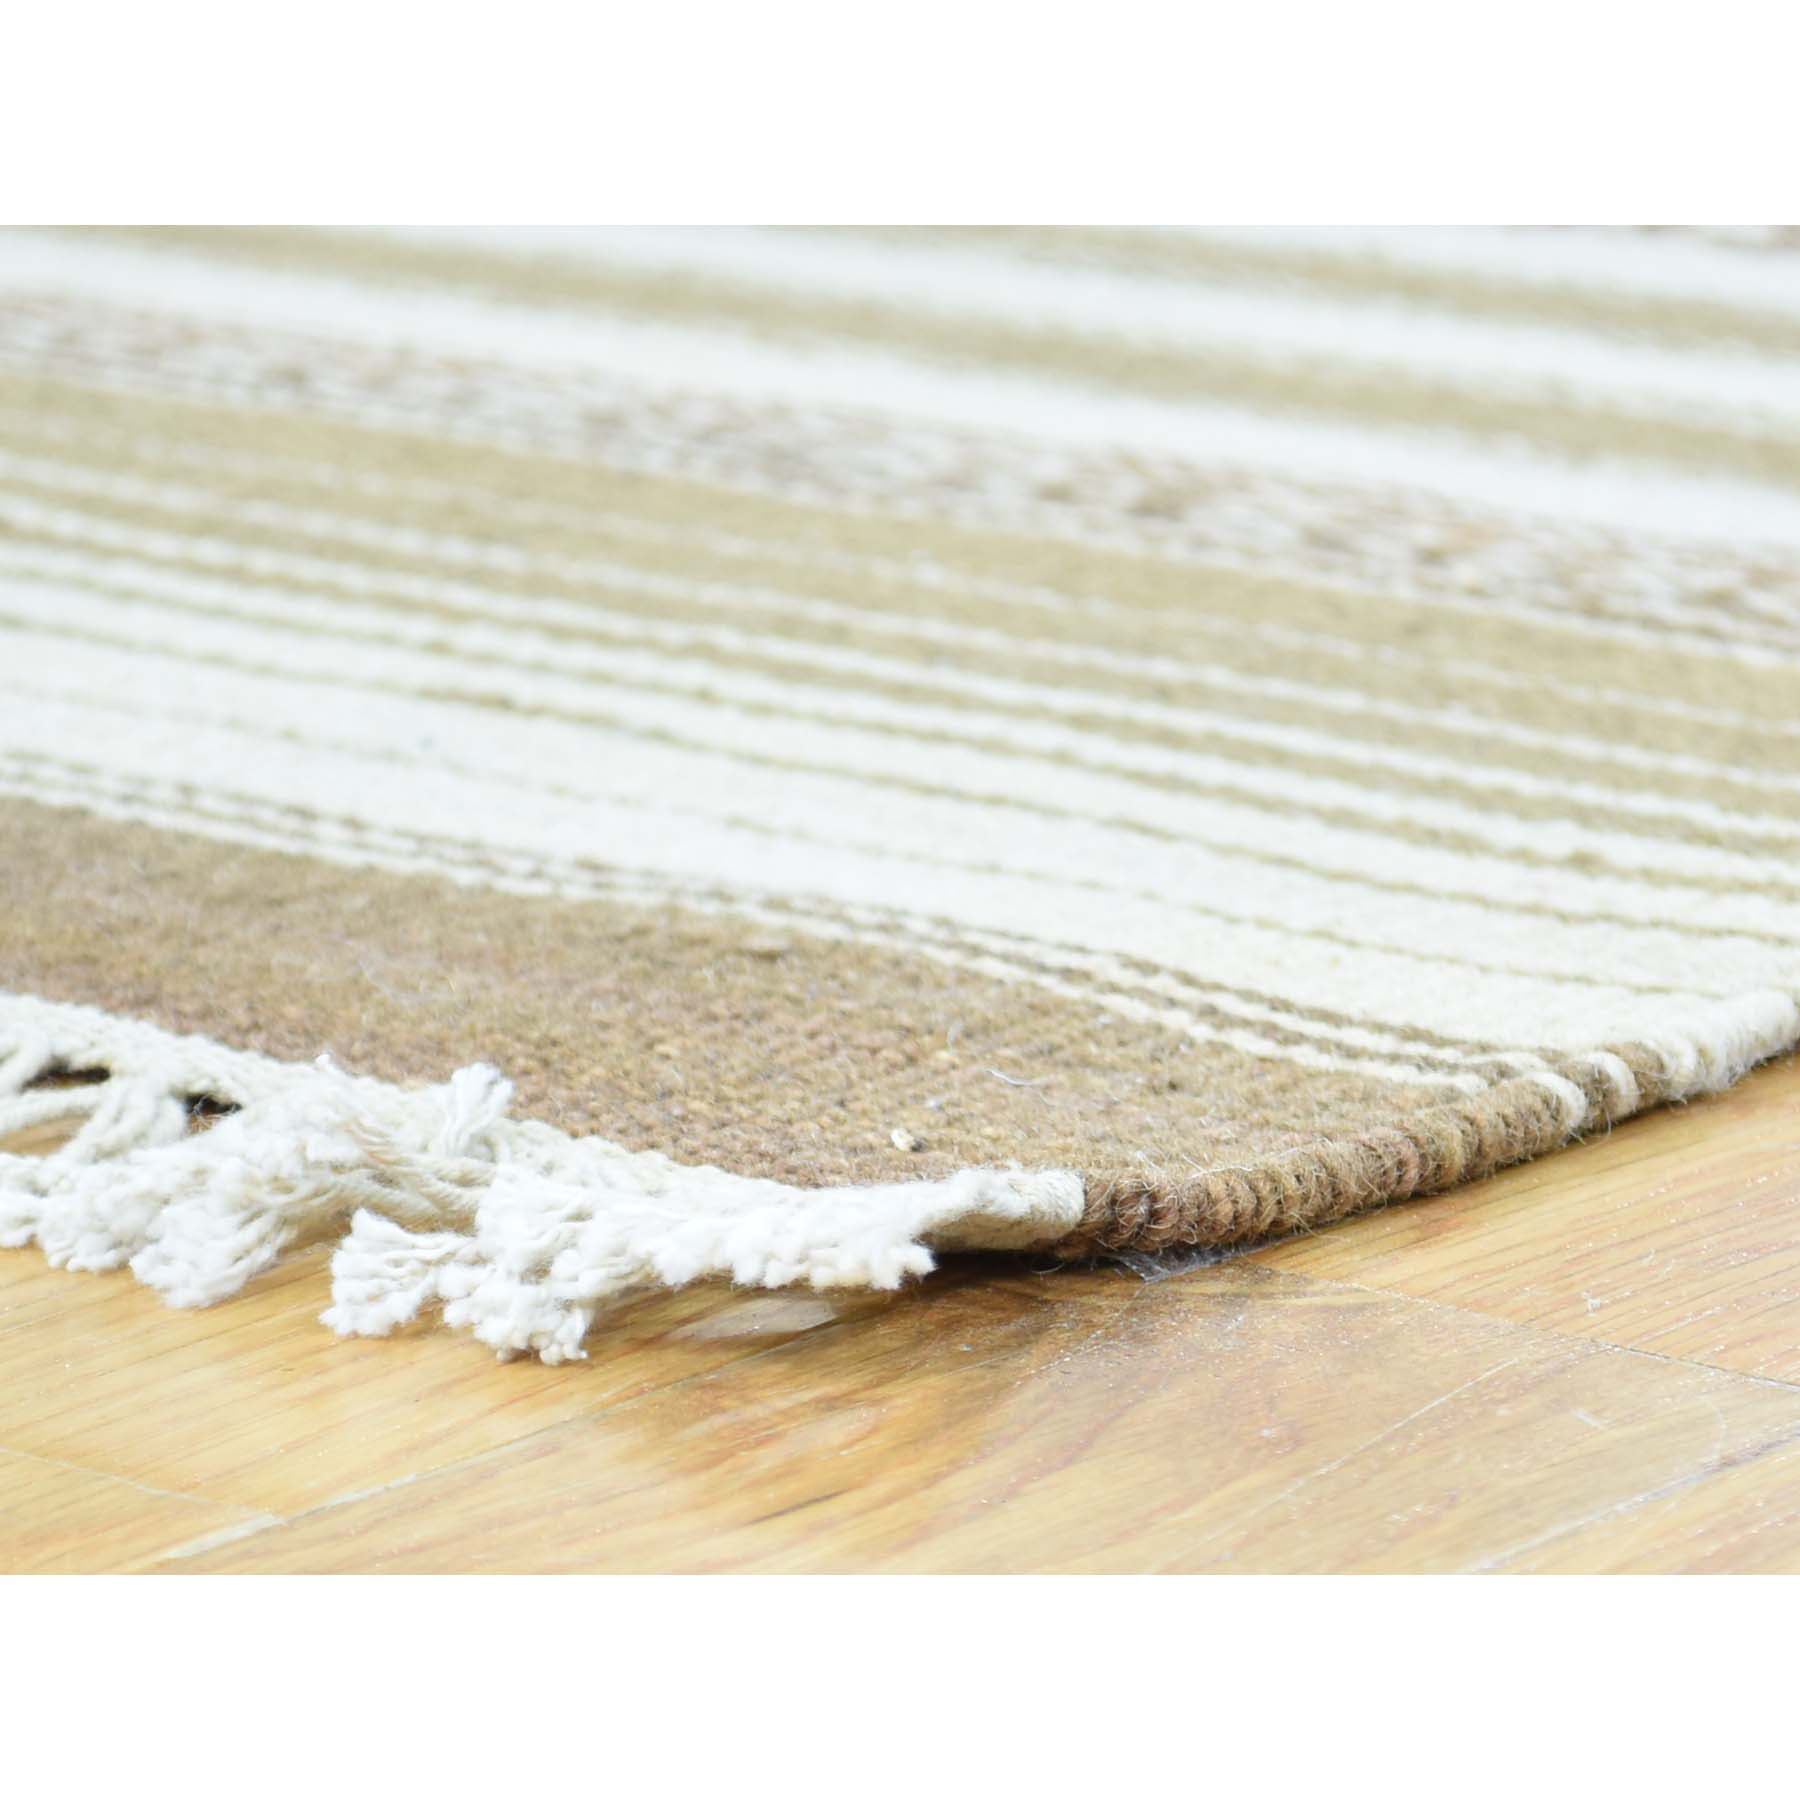 2-10 x5- Hand-Woven Striped Durie Kilim Flat Weave Oriental Carpet 